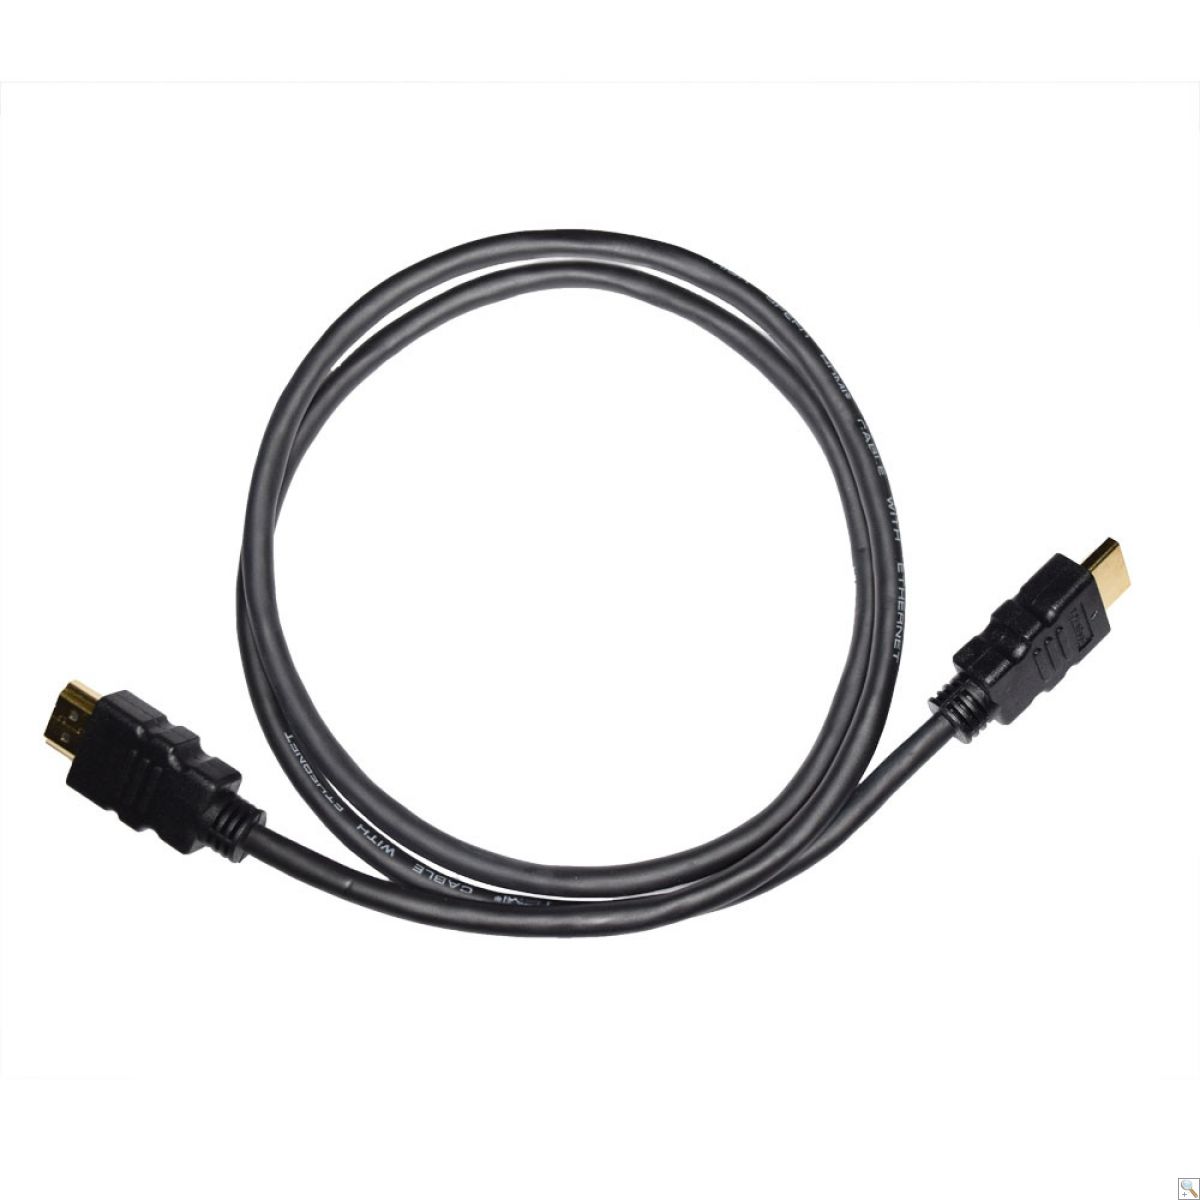 HDMI Cable - 0.5M